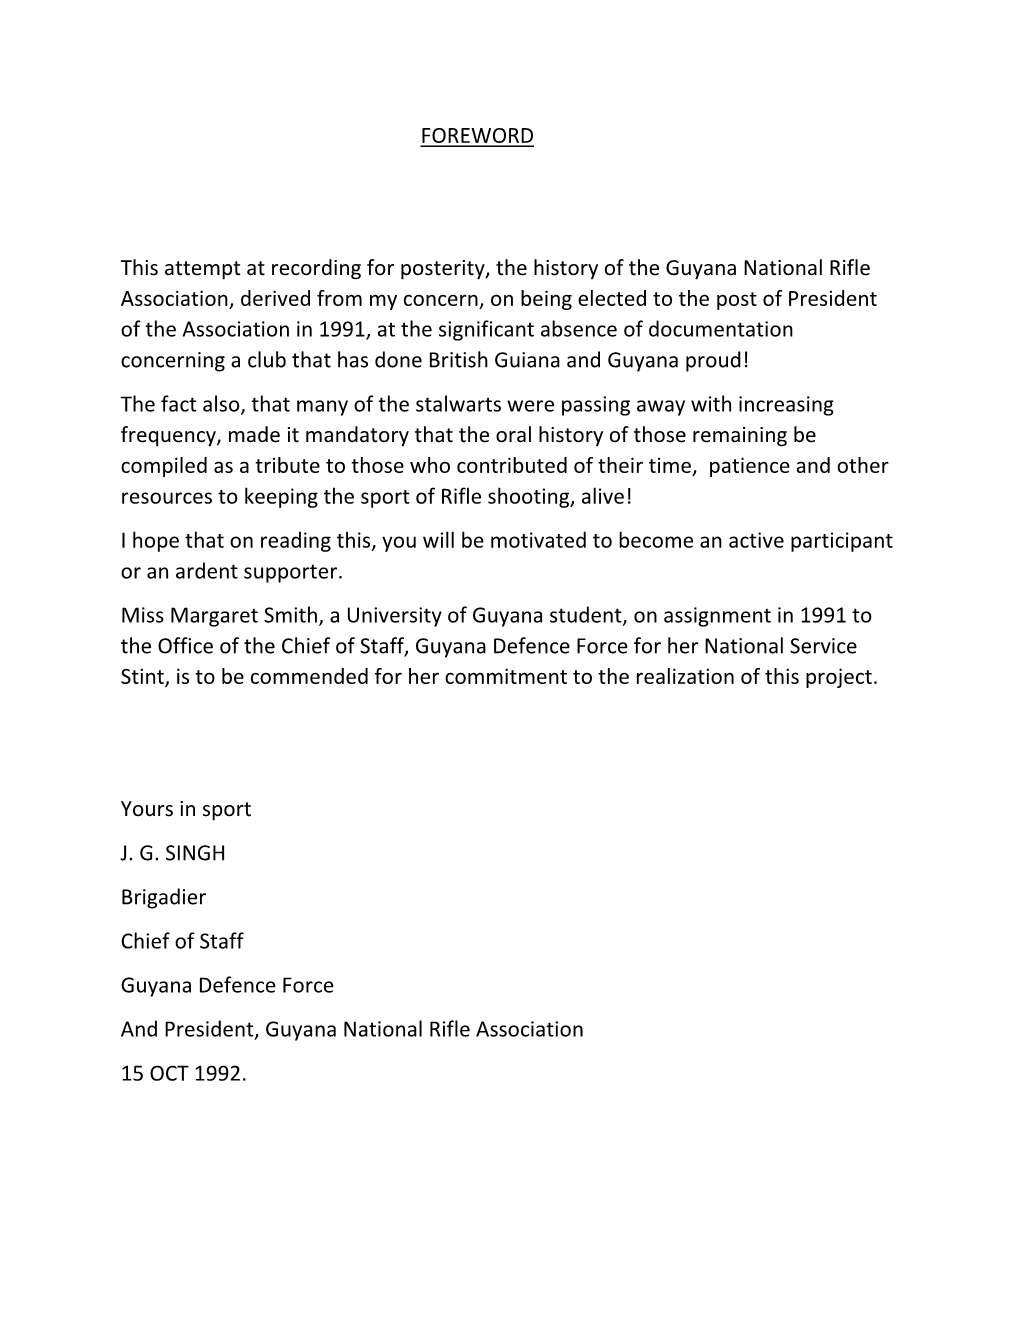 History of the Guyana National Rifle Association